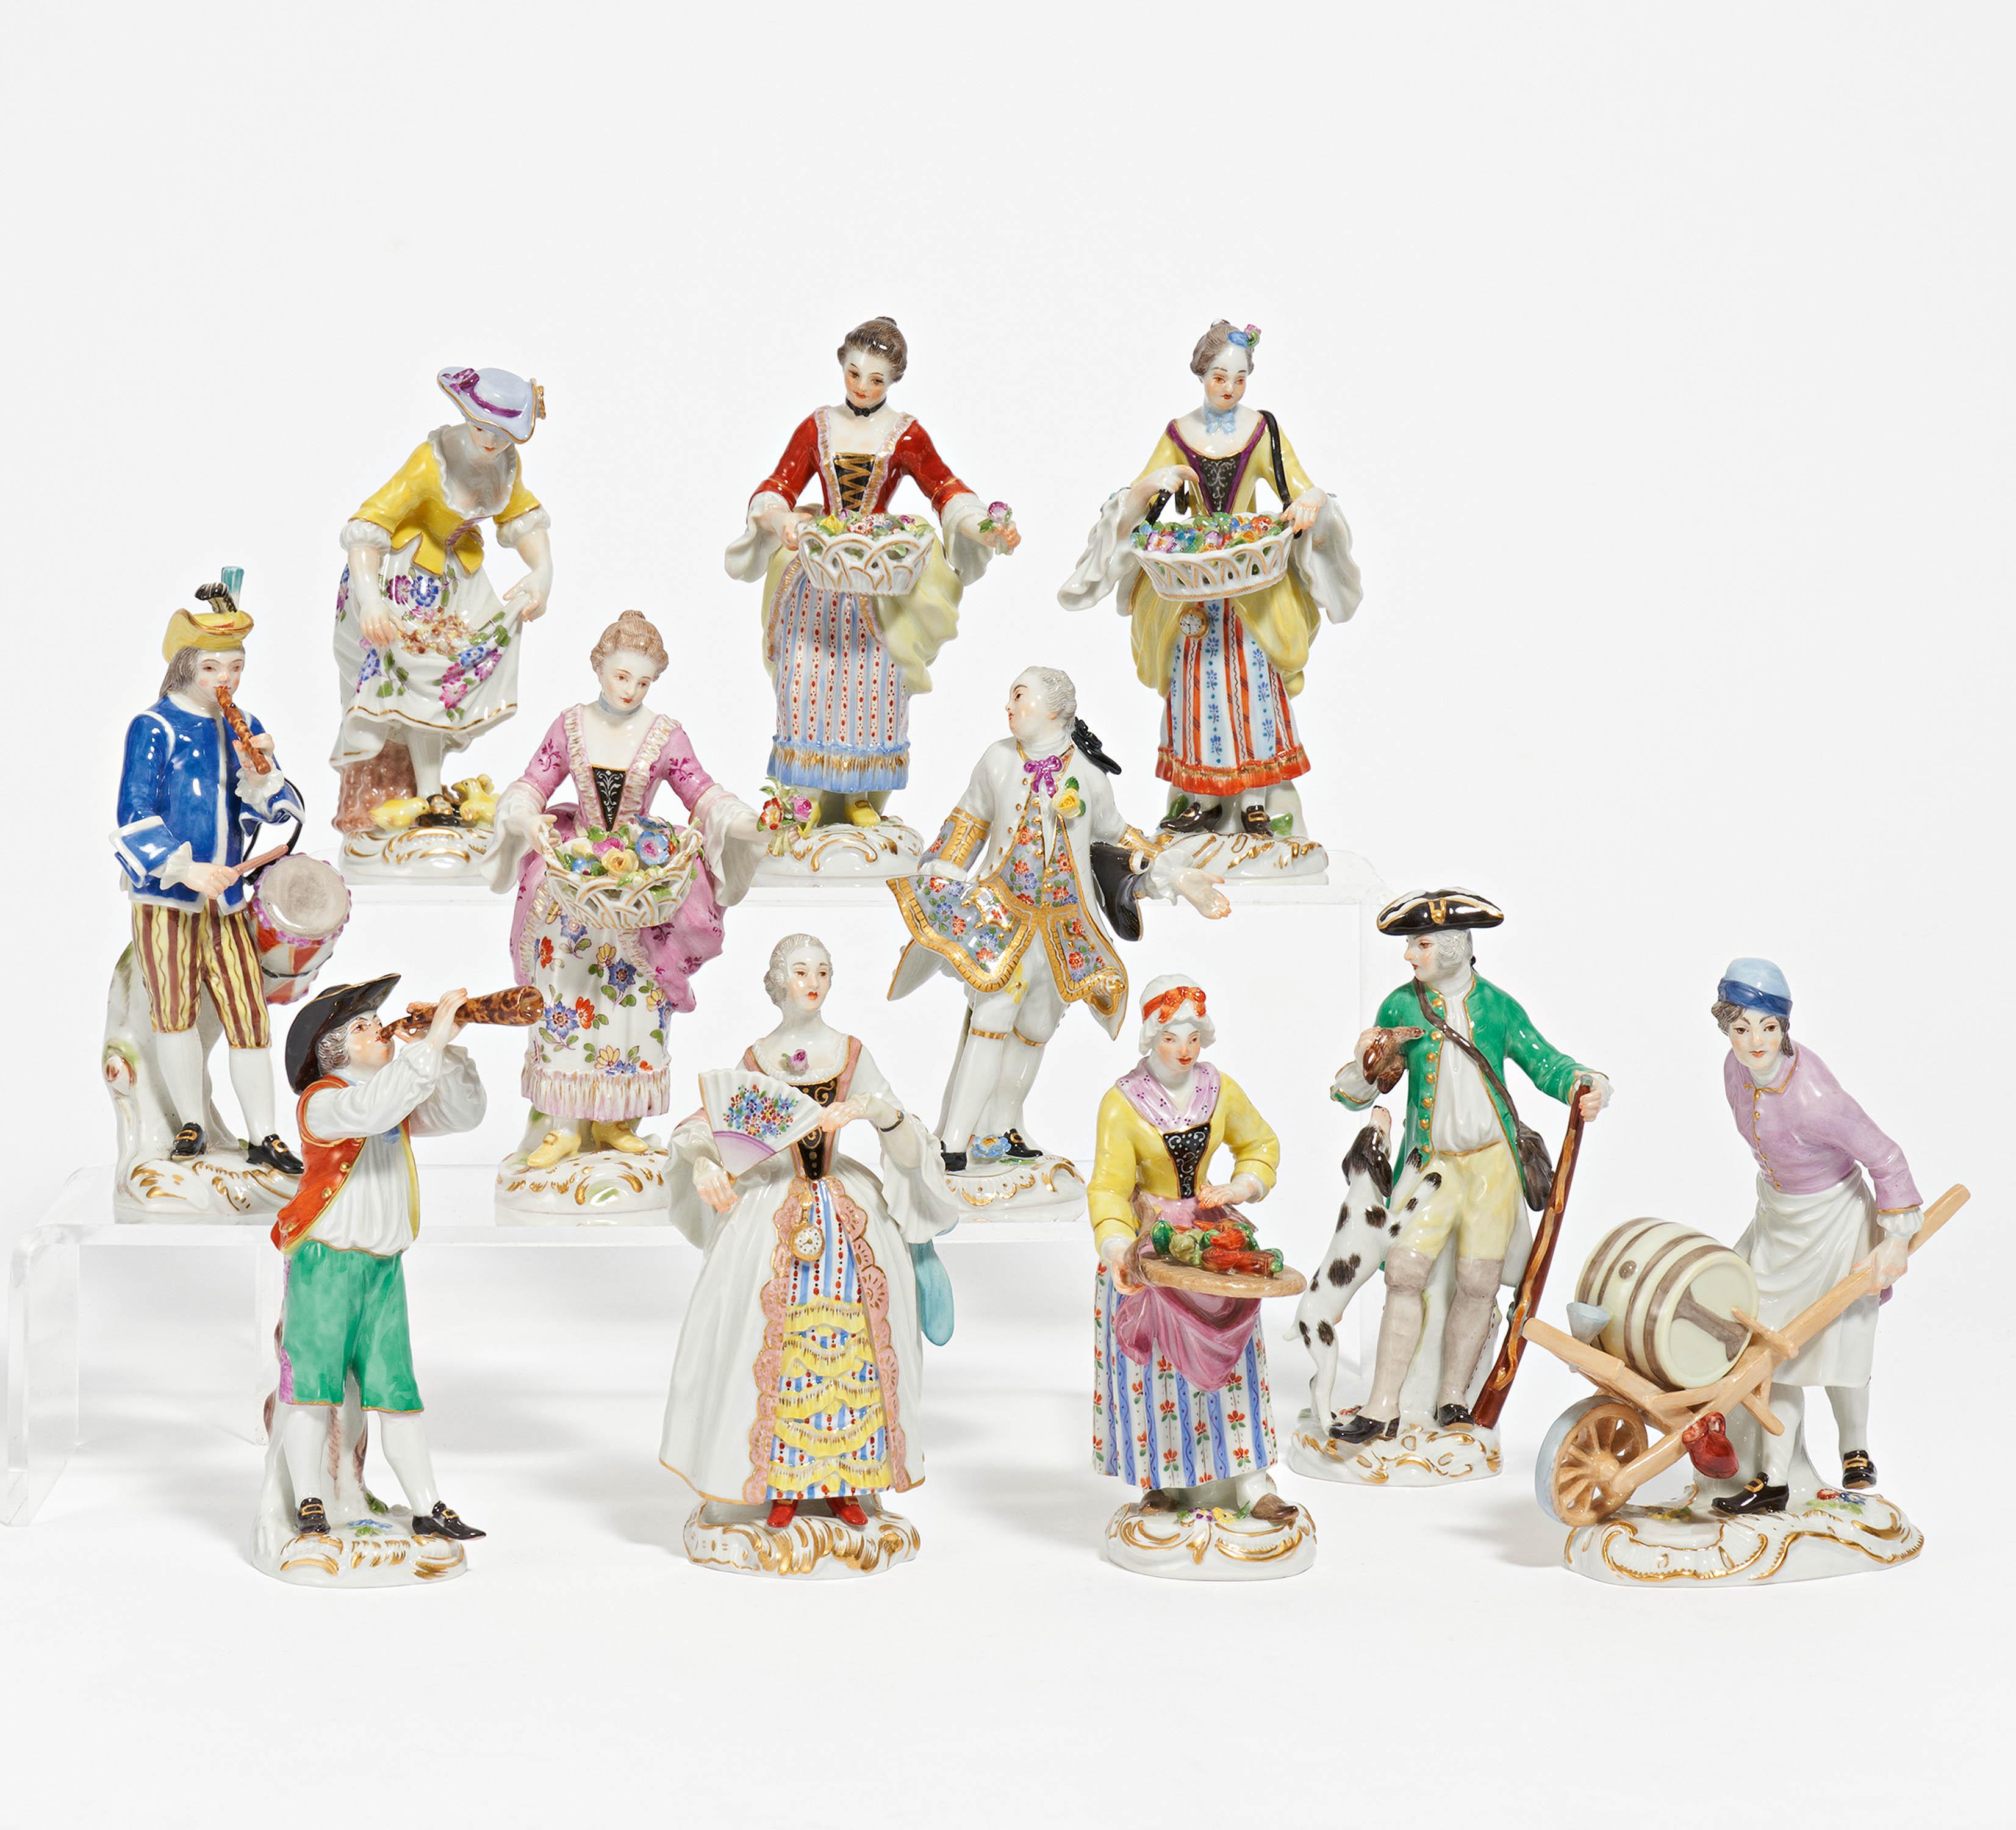 11 figurines from a series "Cris de Paris"